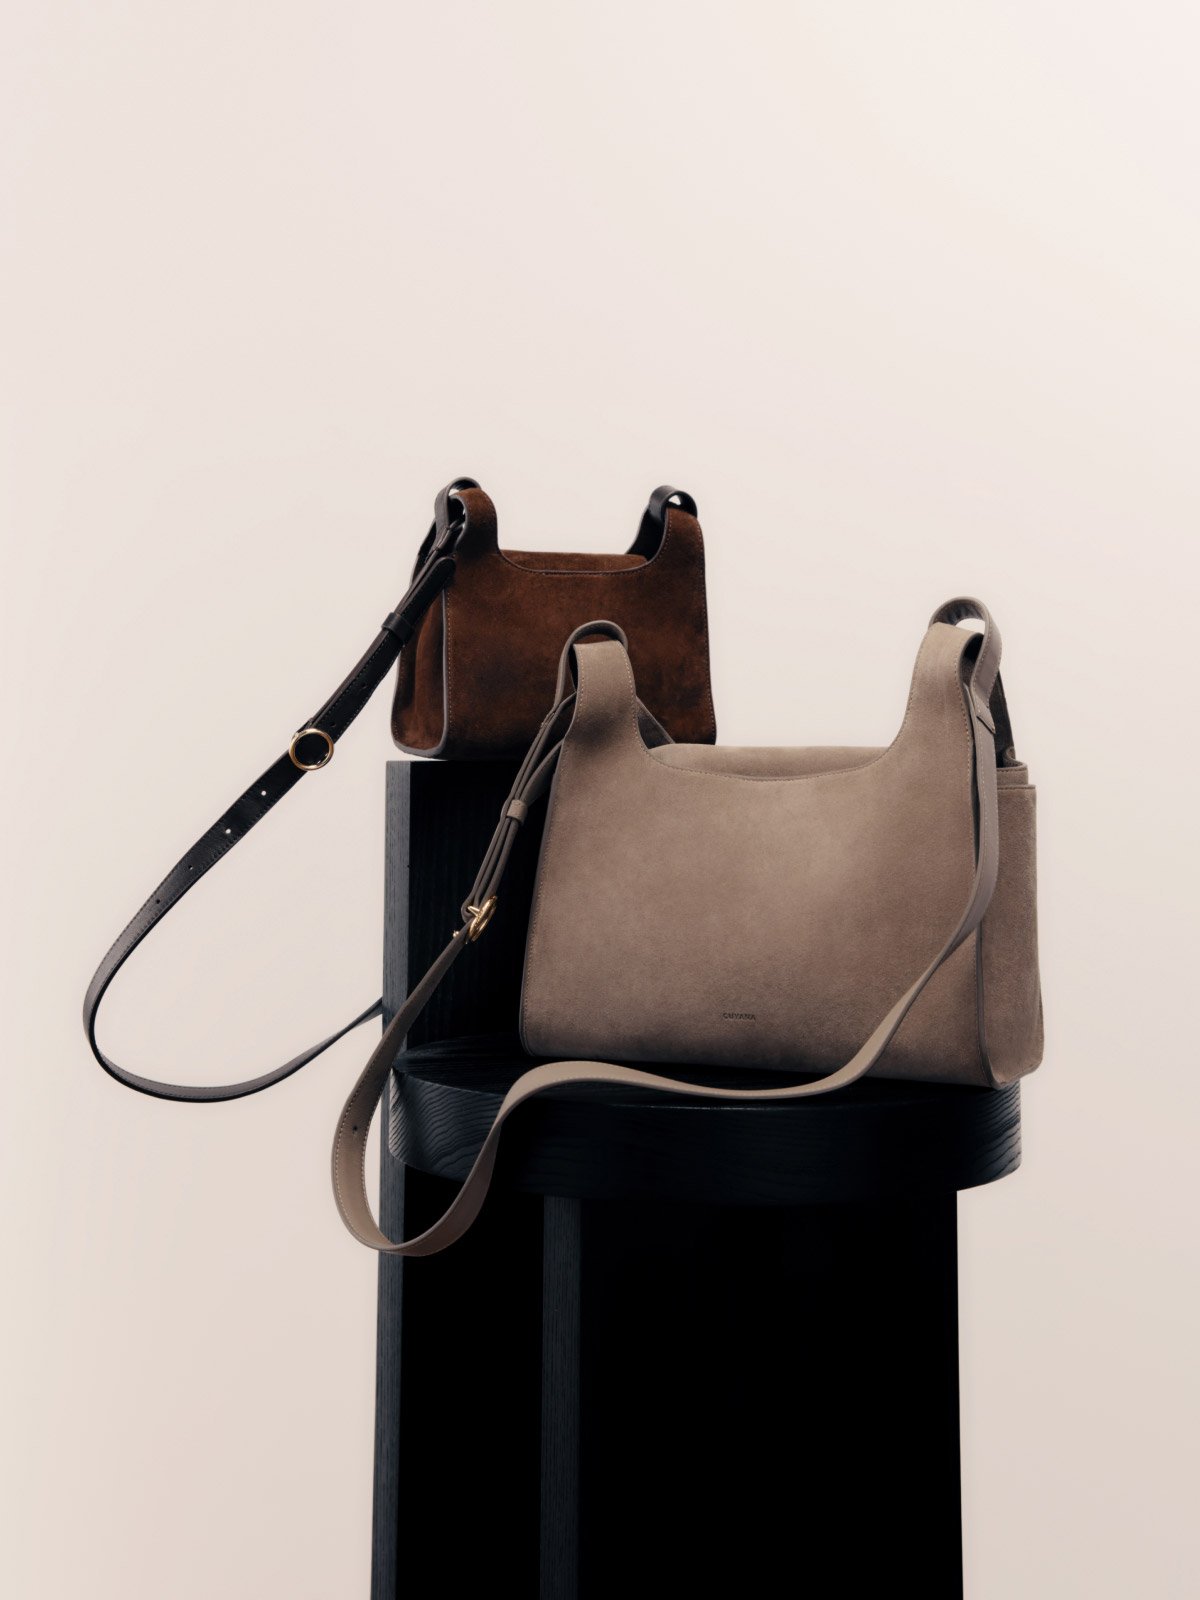 Cuyana - Meet our new Double Loop Bag. Lightweight